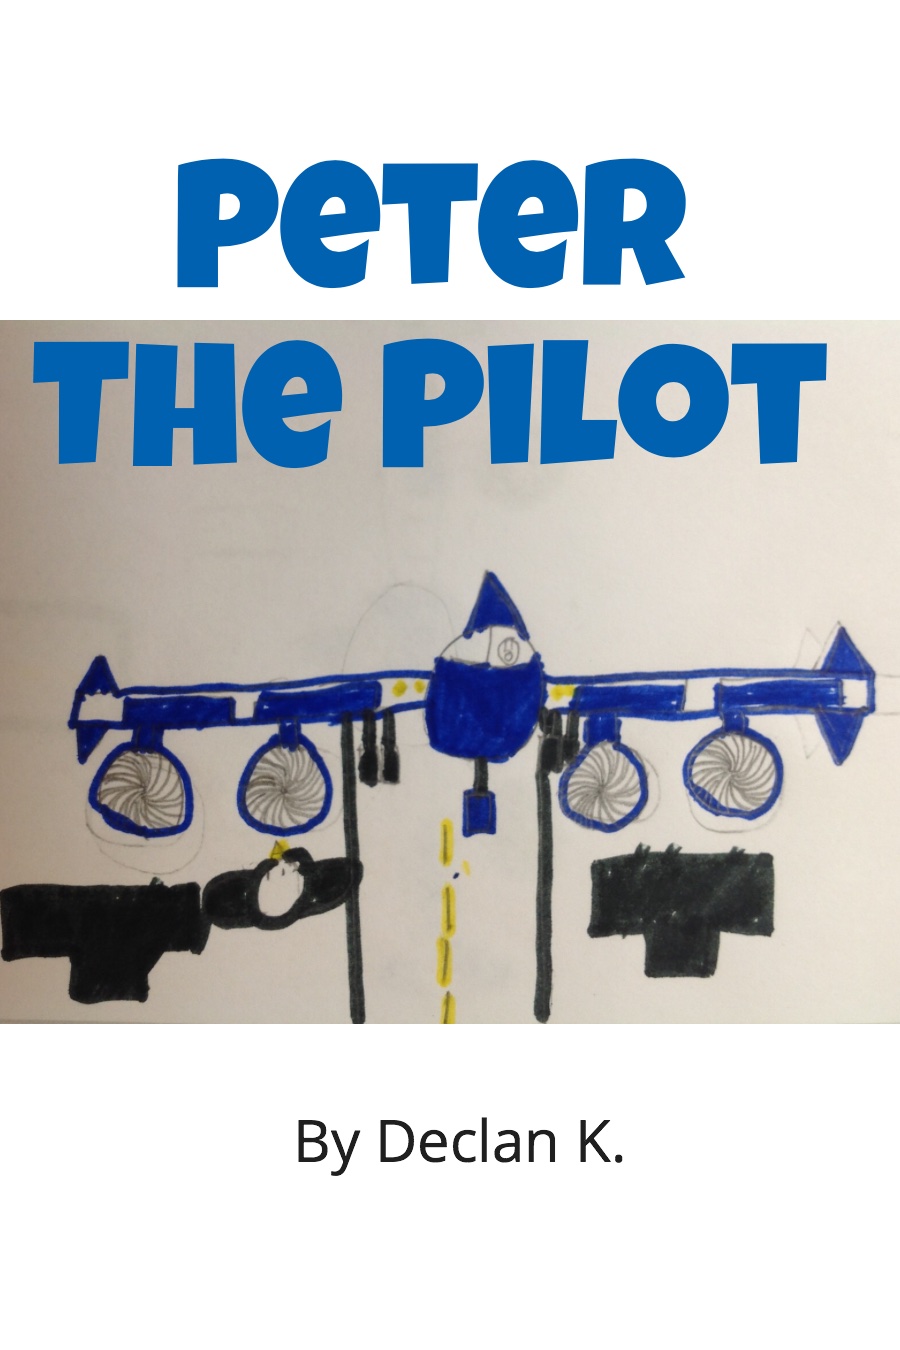 Peter the Pilot by Declan K (1)